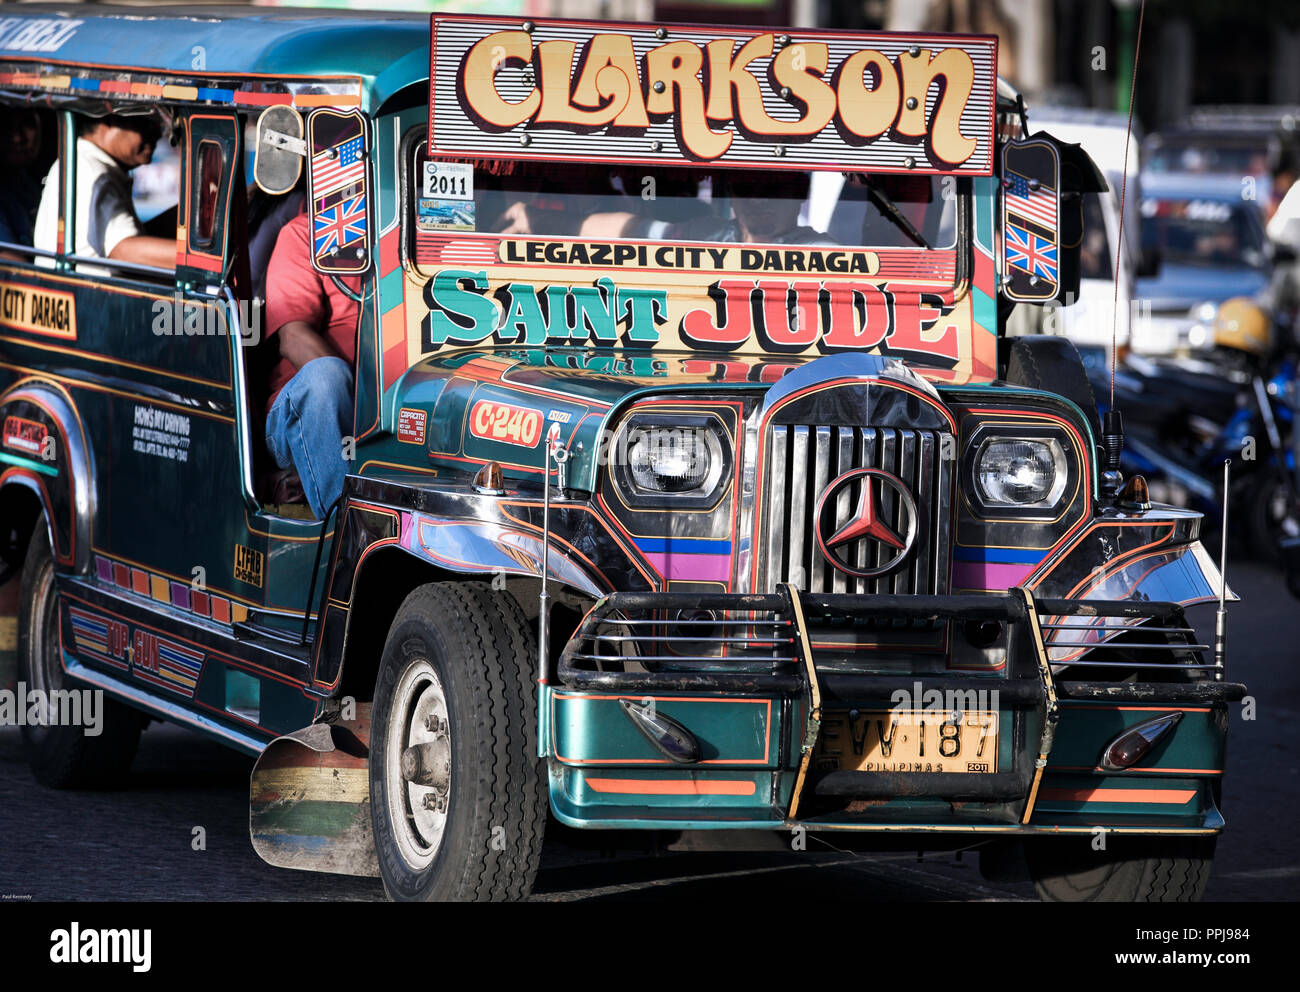 Jeepney bus in Legazpi city, Philippines Stock Photo